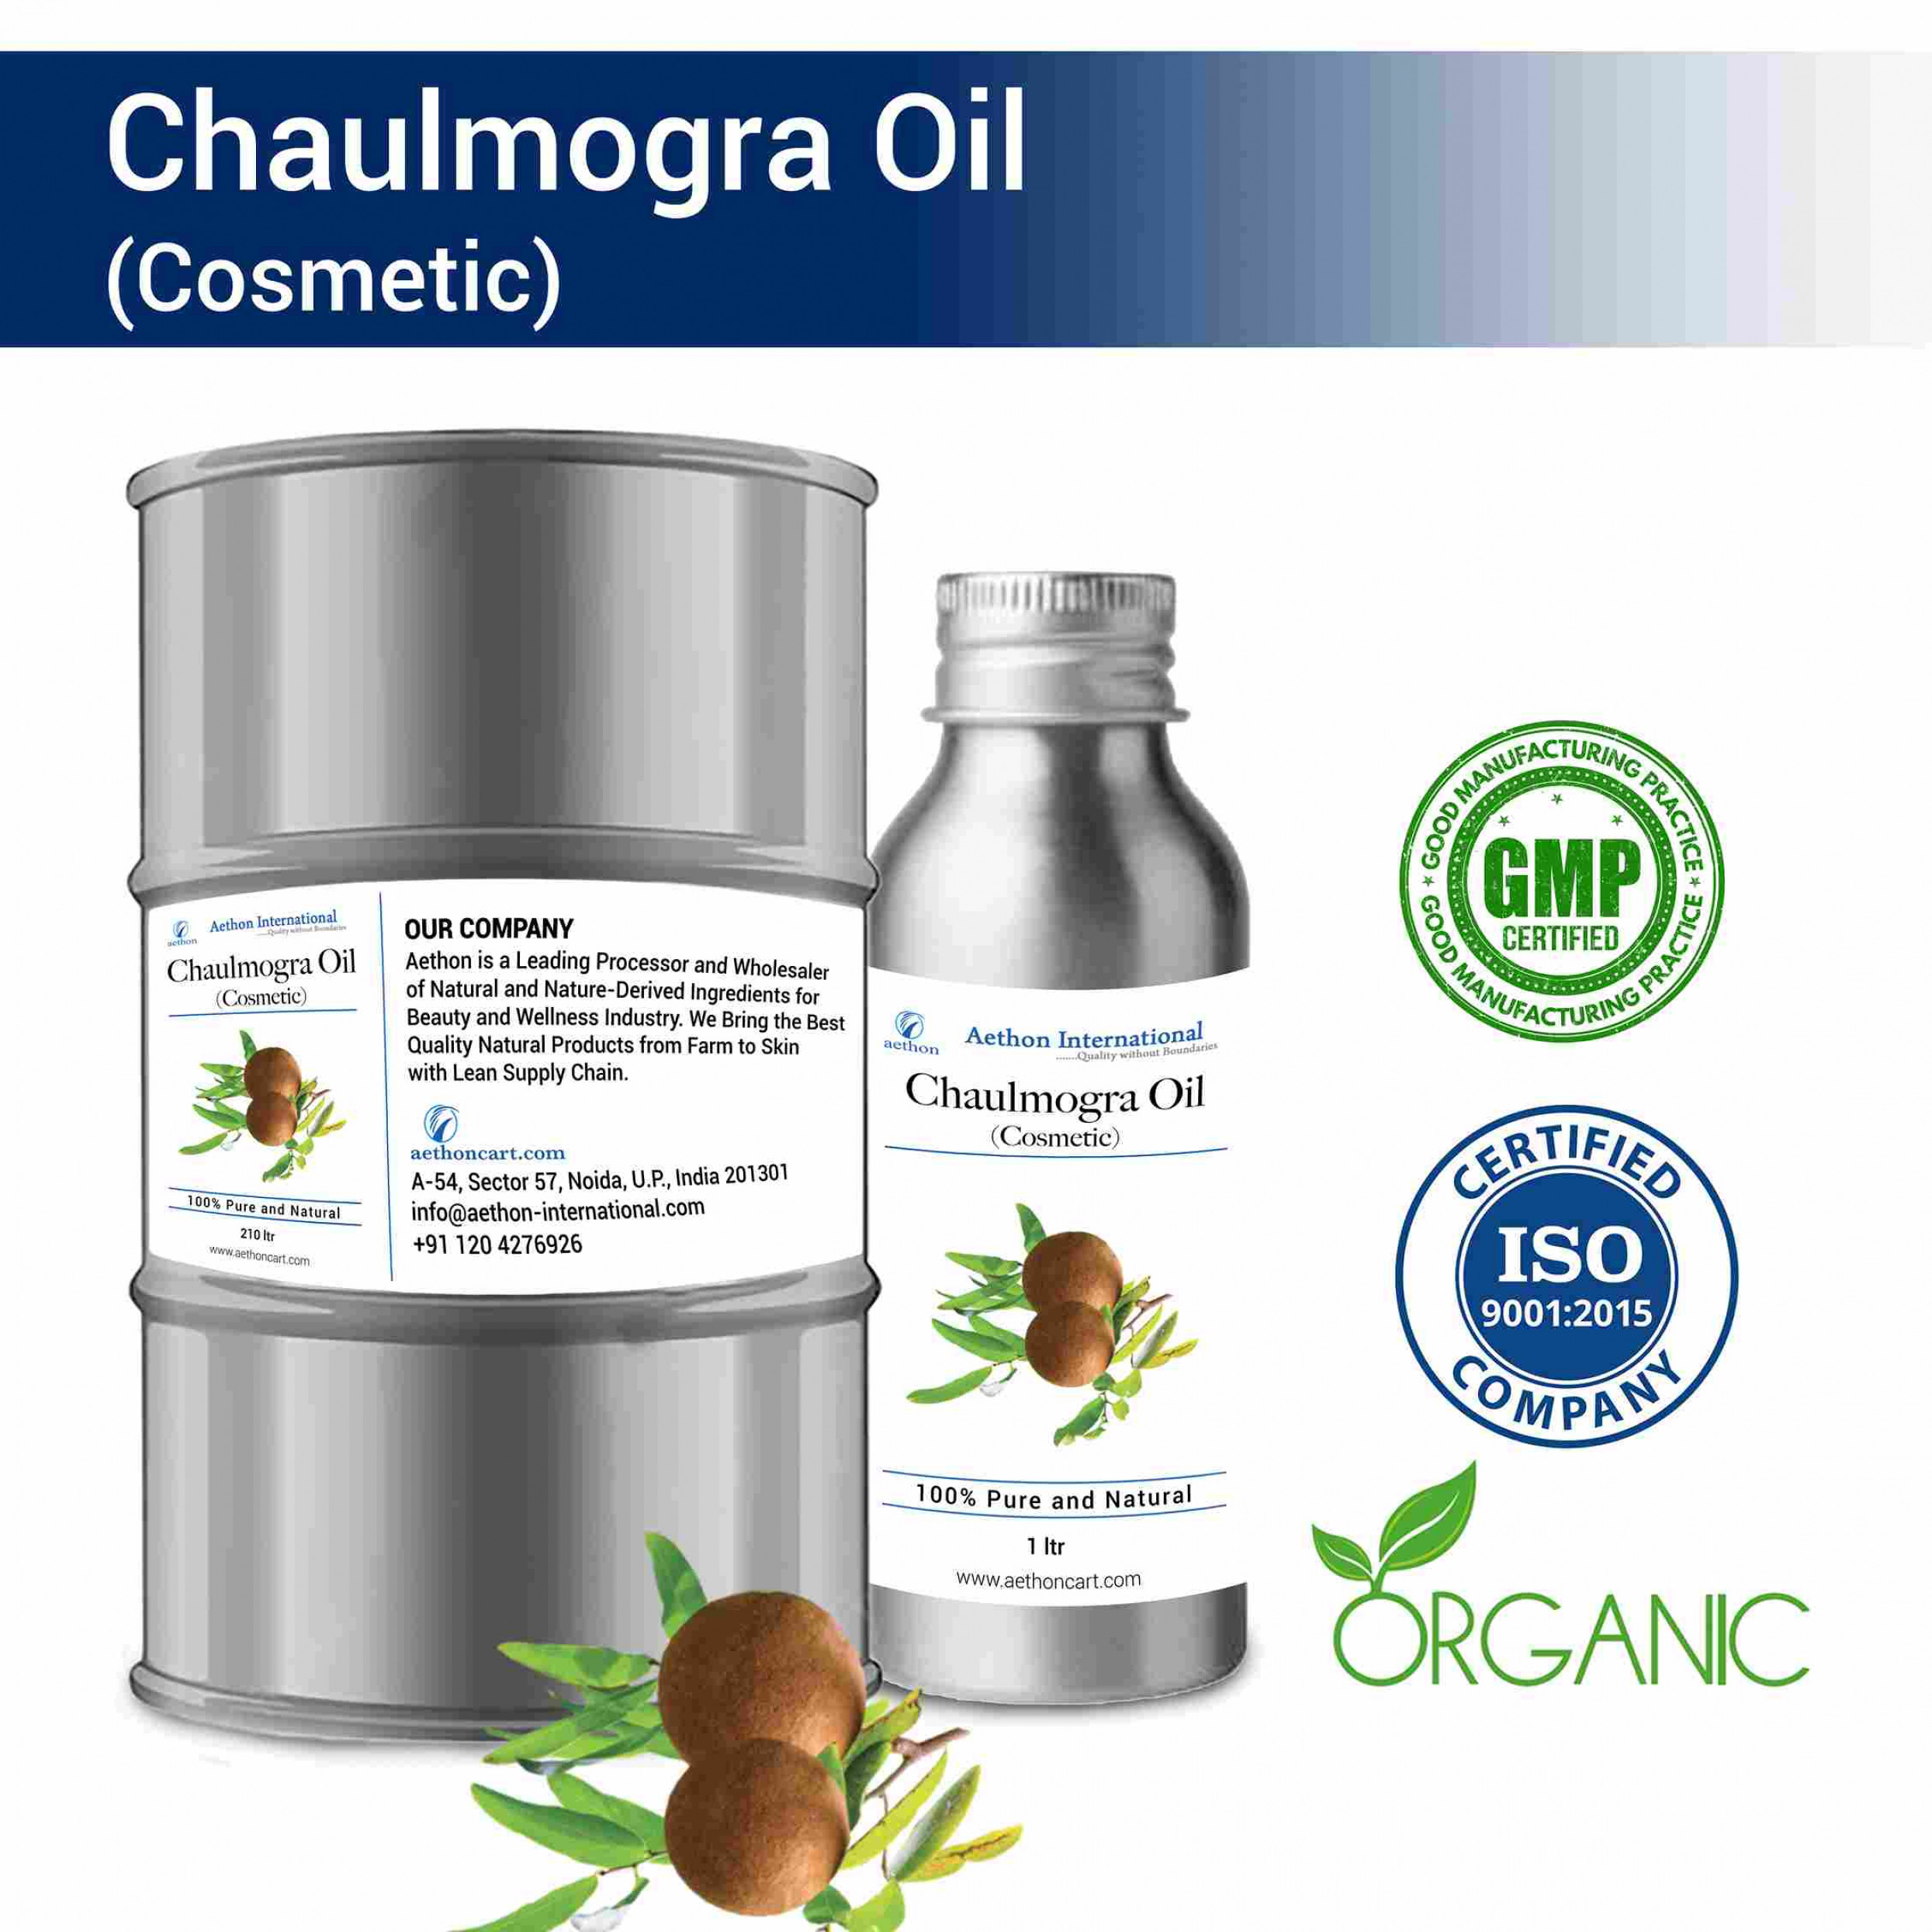 Chaulmogra Oil (Cosmetic)